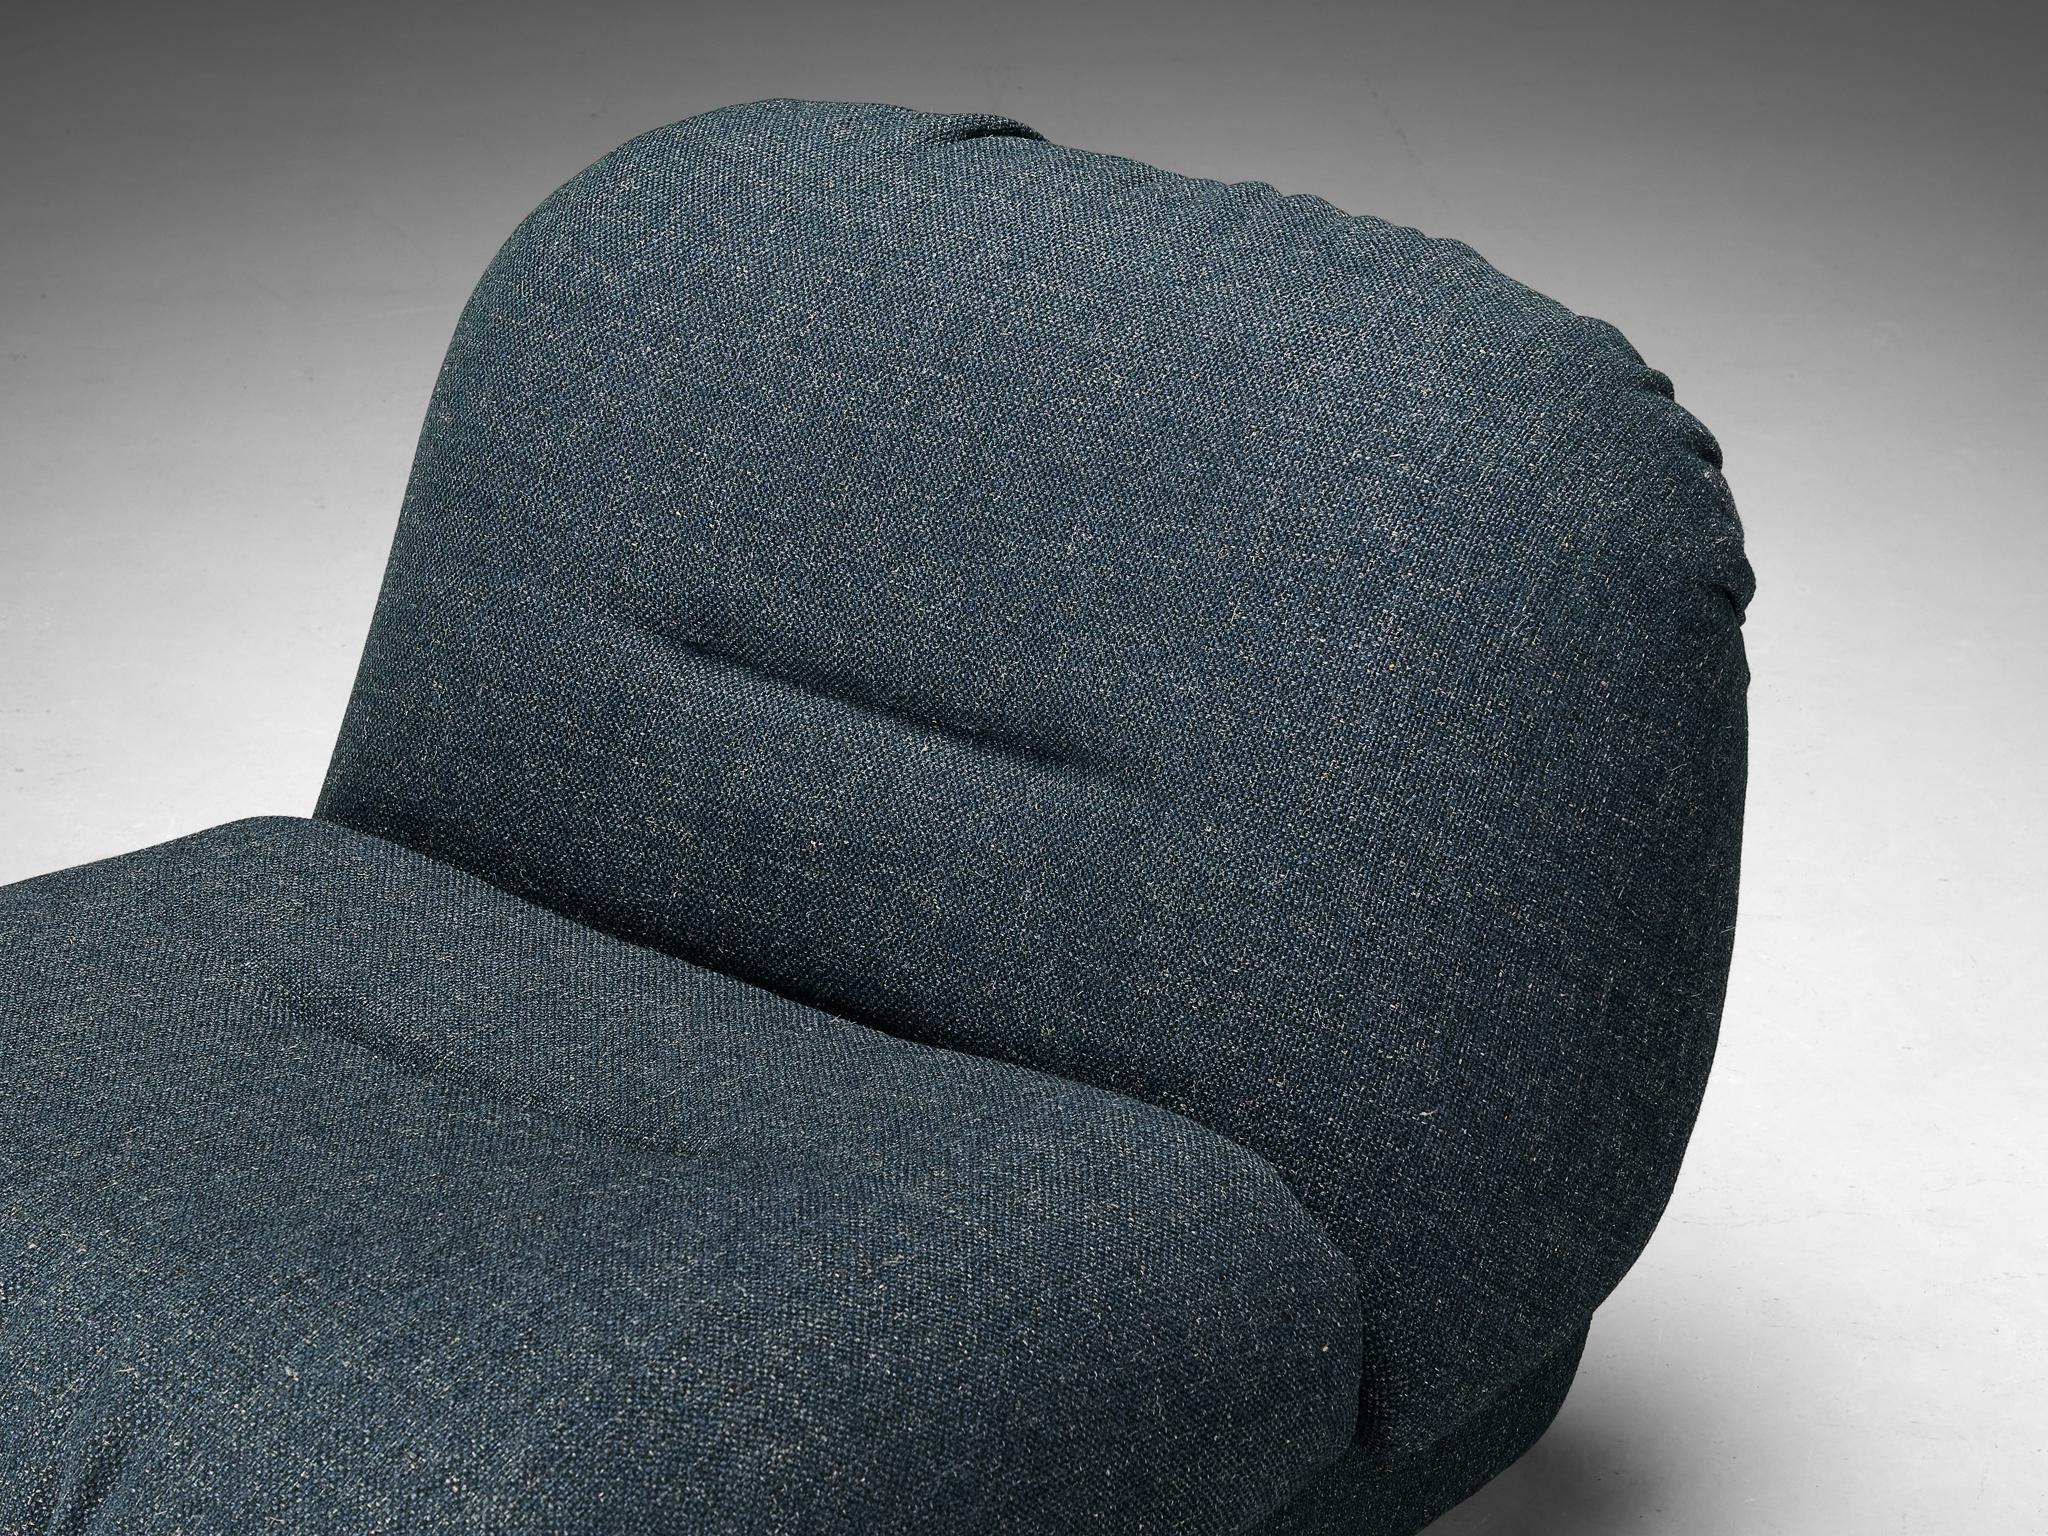 Alberto Rosselli for Saporiti 'Maxijumbo' Lounge Chairs  For Sale 1